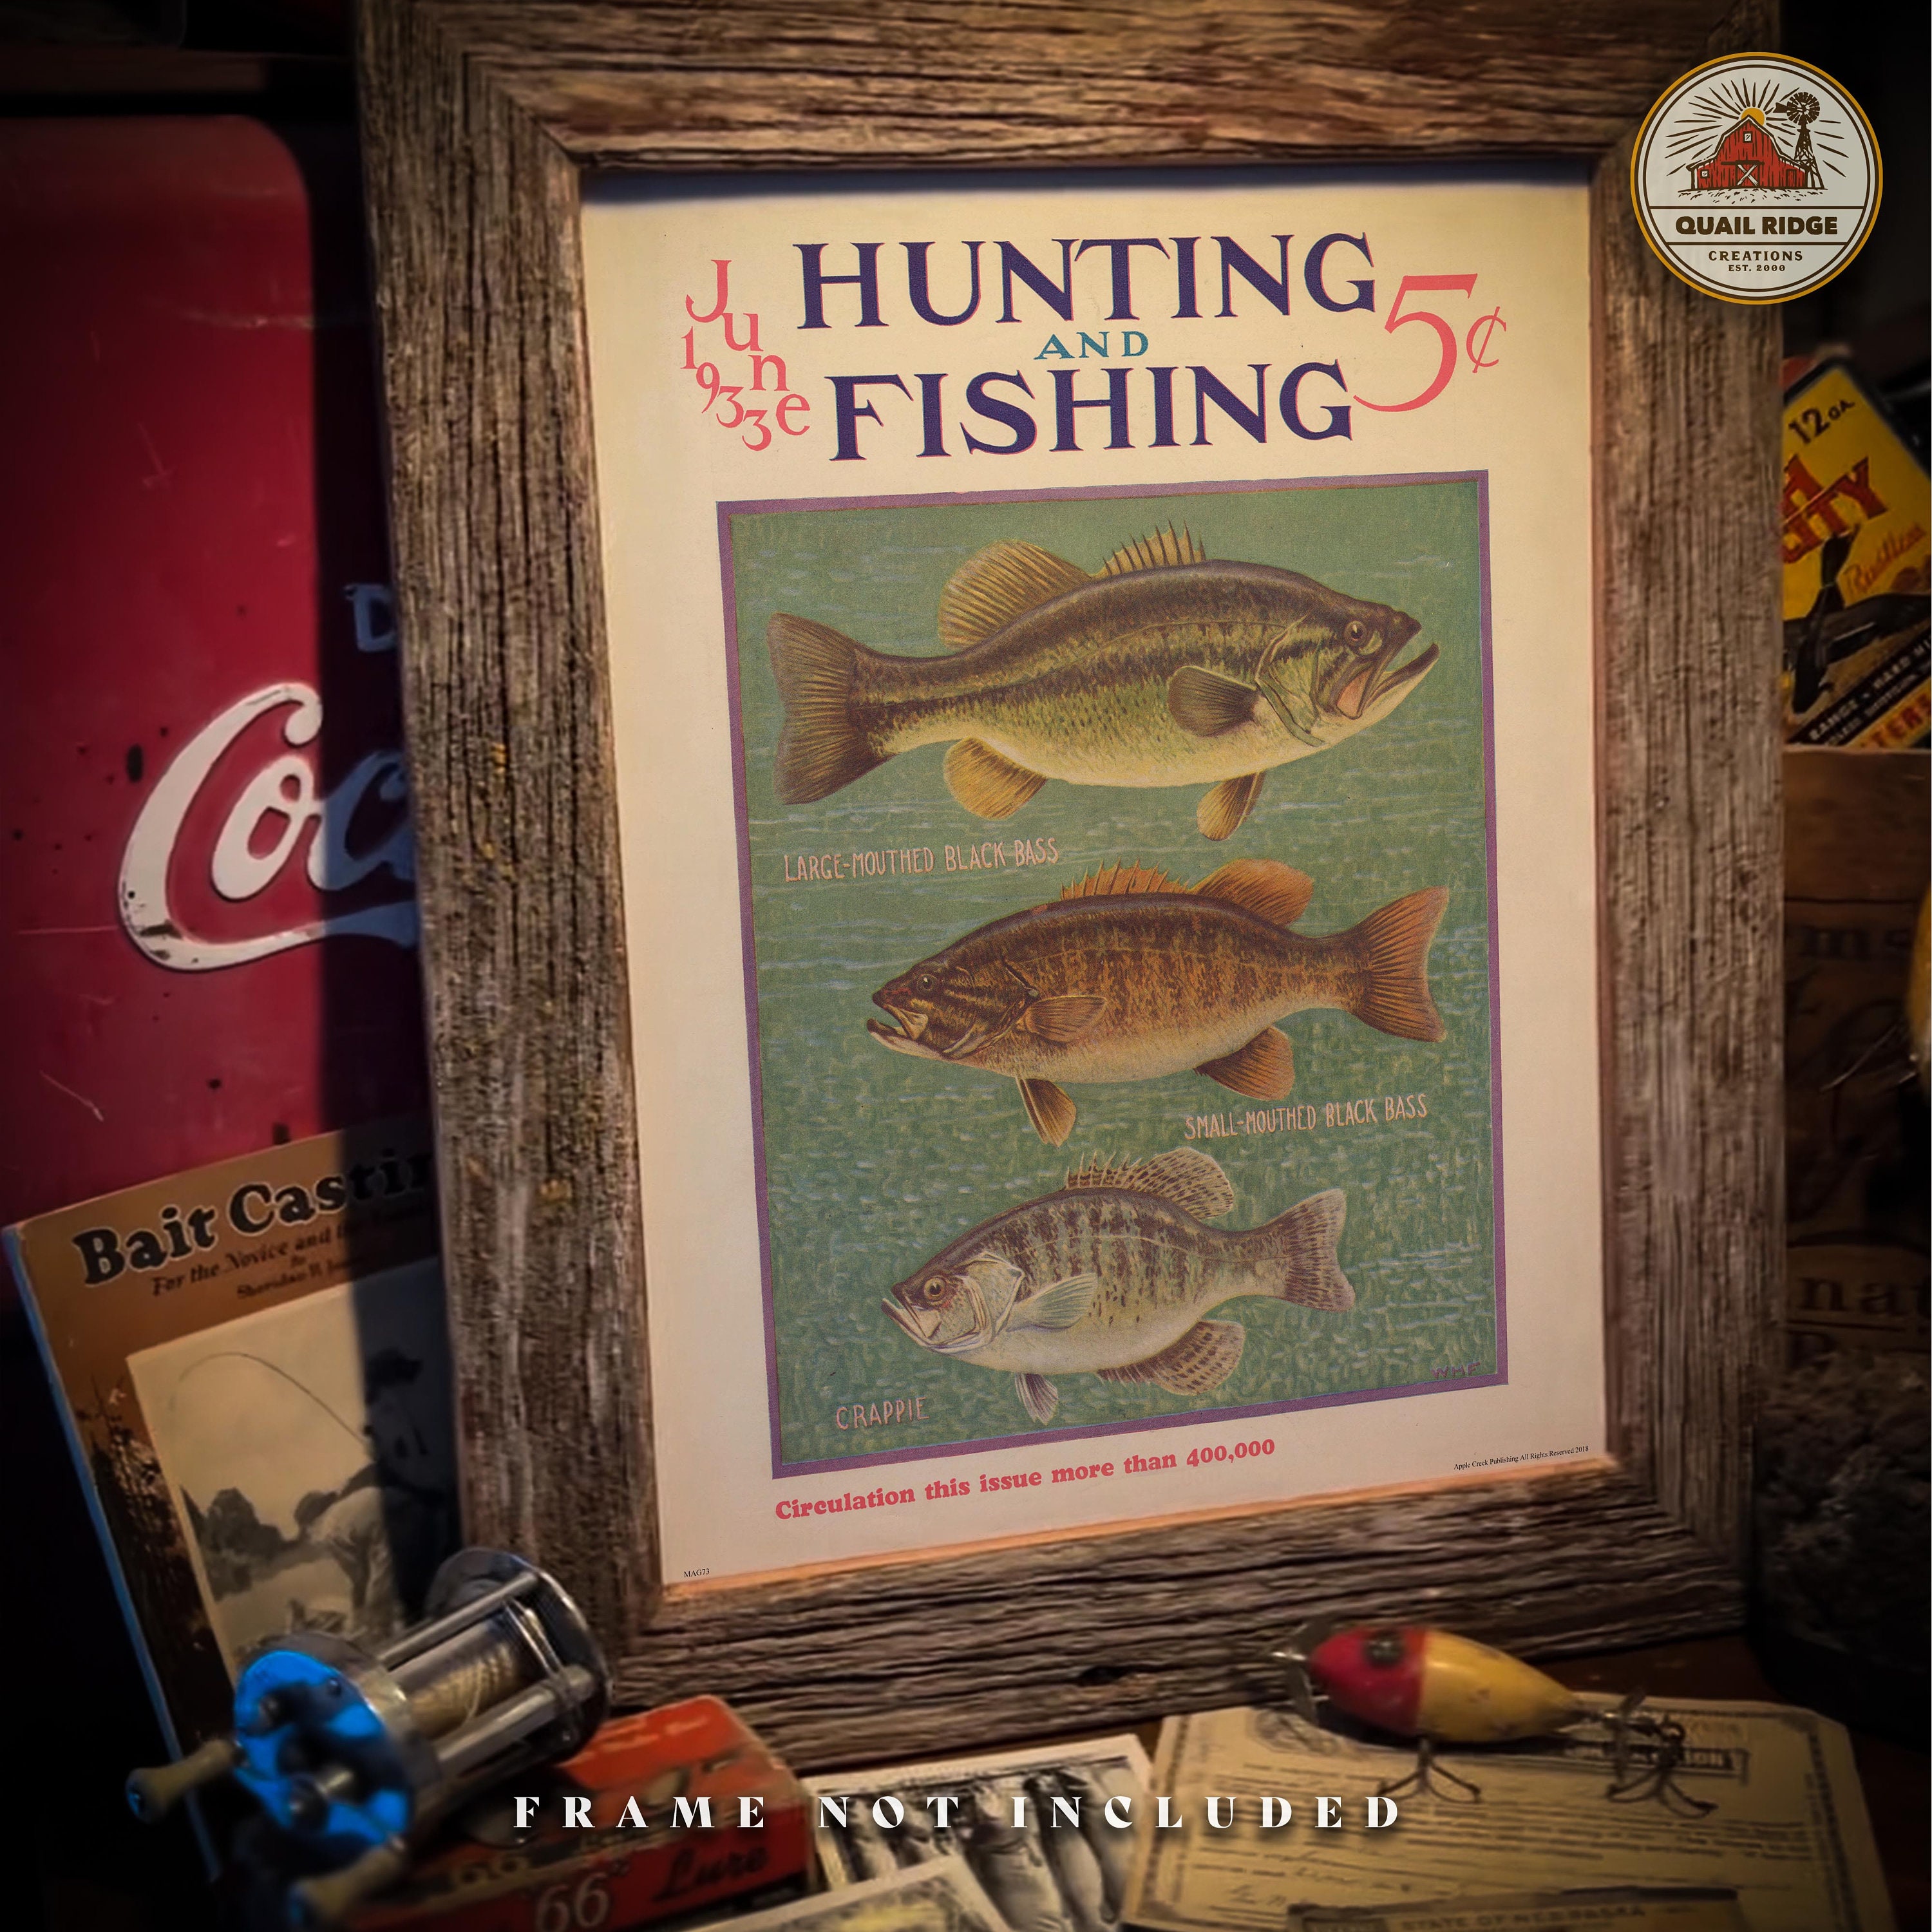  Vintage Creek Chub Fishing Lure Patent Print Poster 11x17  Largemouth Bass Fish Cabin Wall Art Decor: Posters & Prints